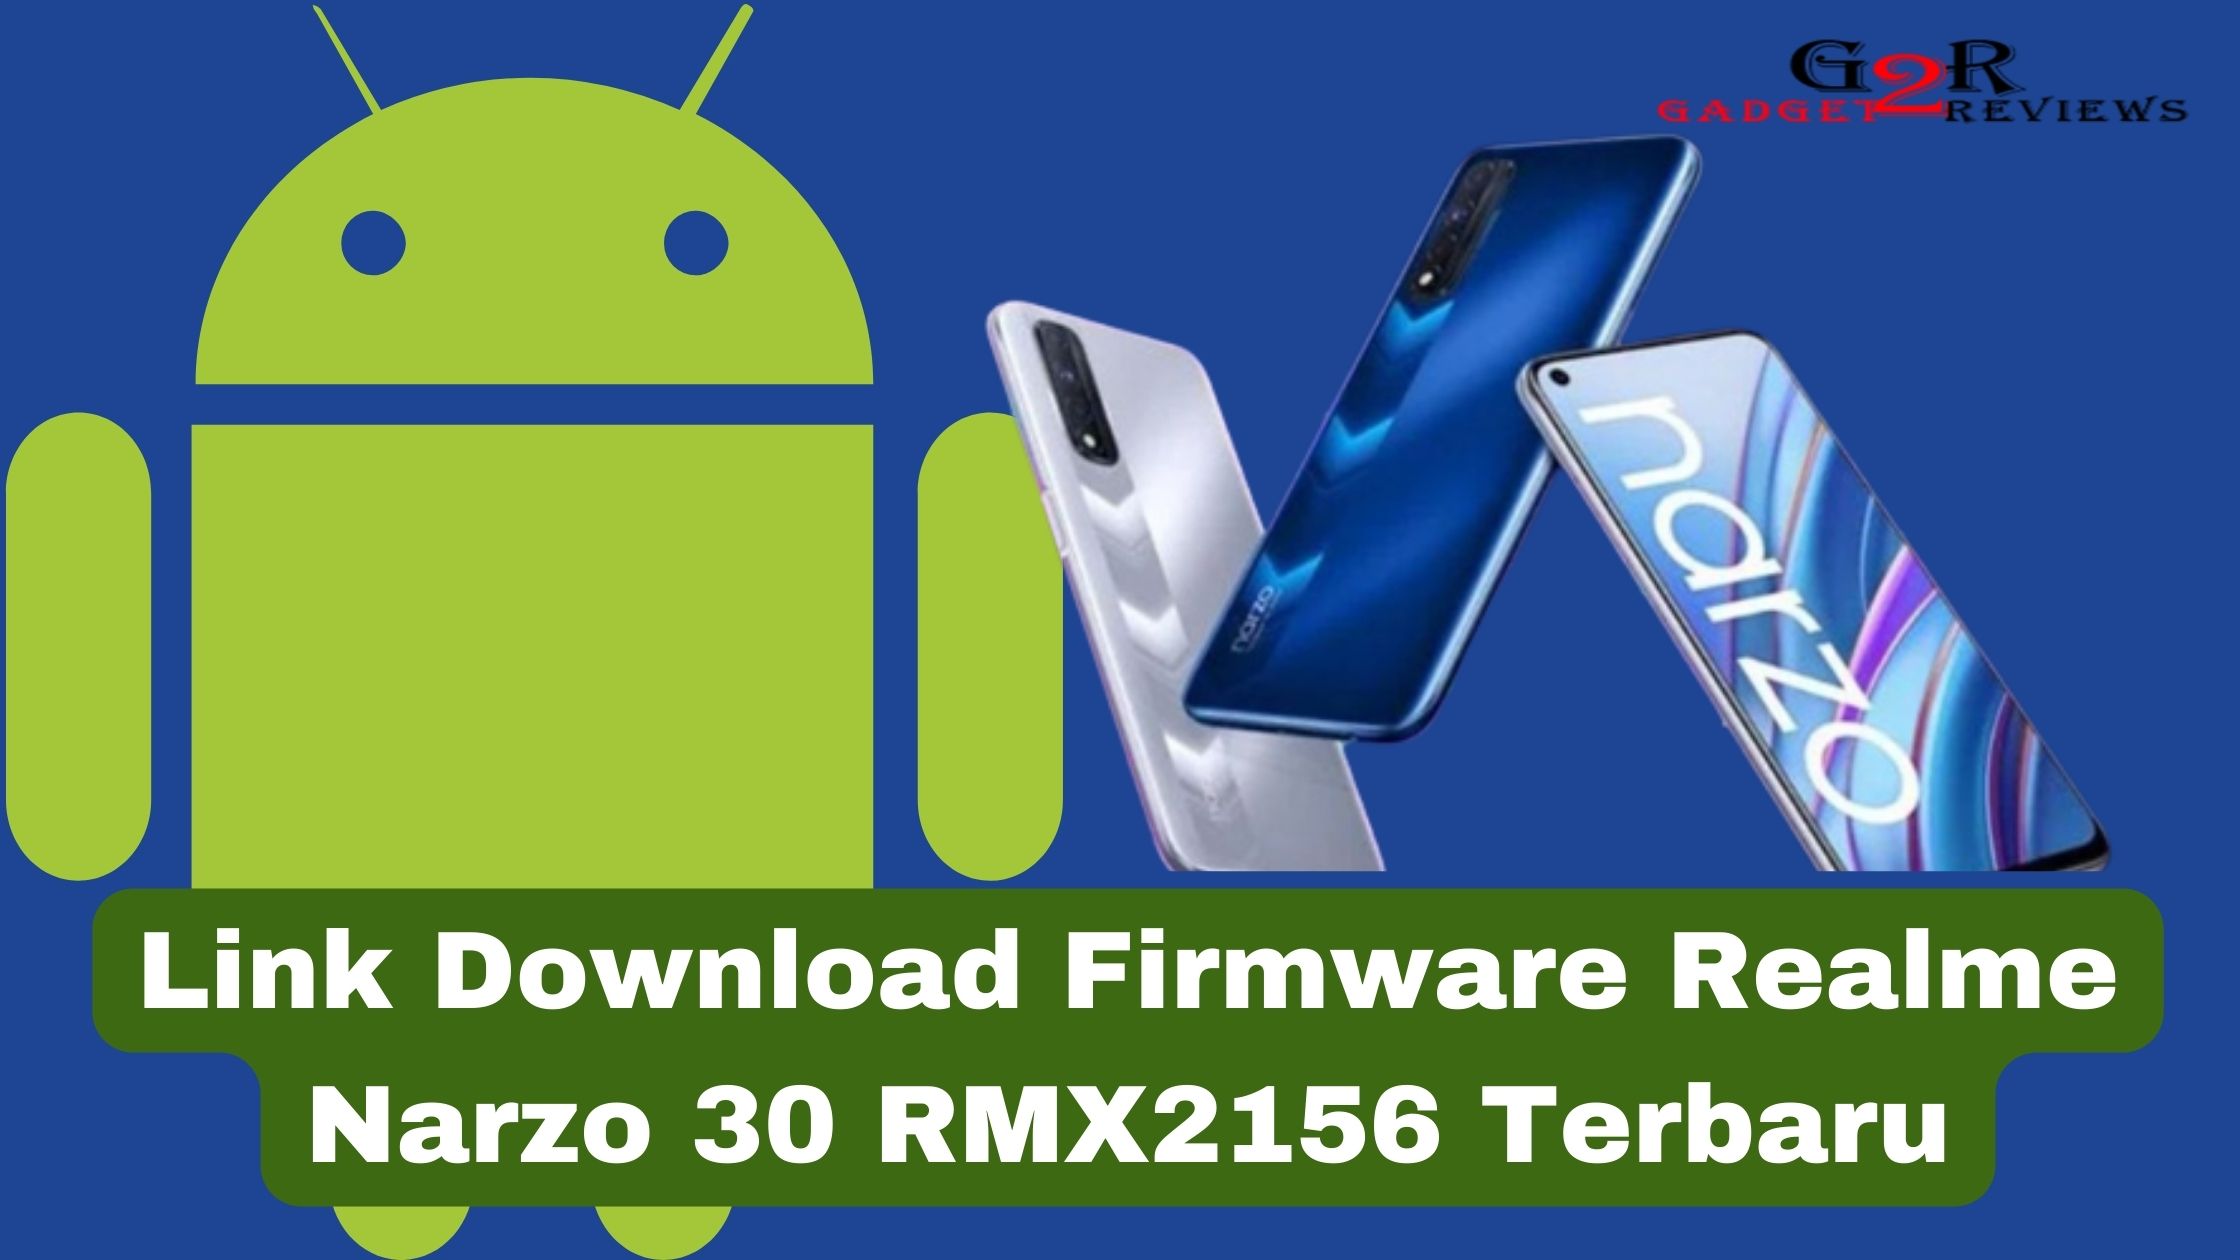 Link Download Firmware Realme Narzo 30 RMX2156 Terbaru